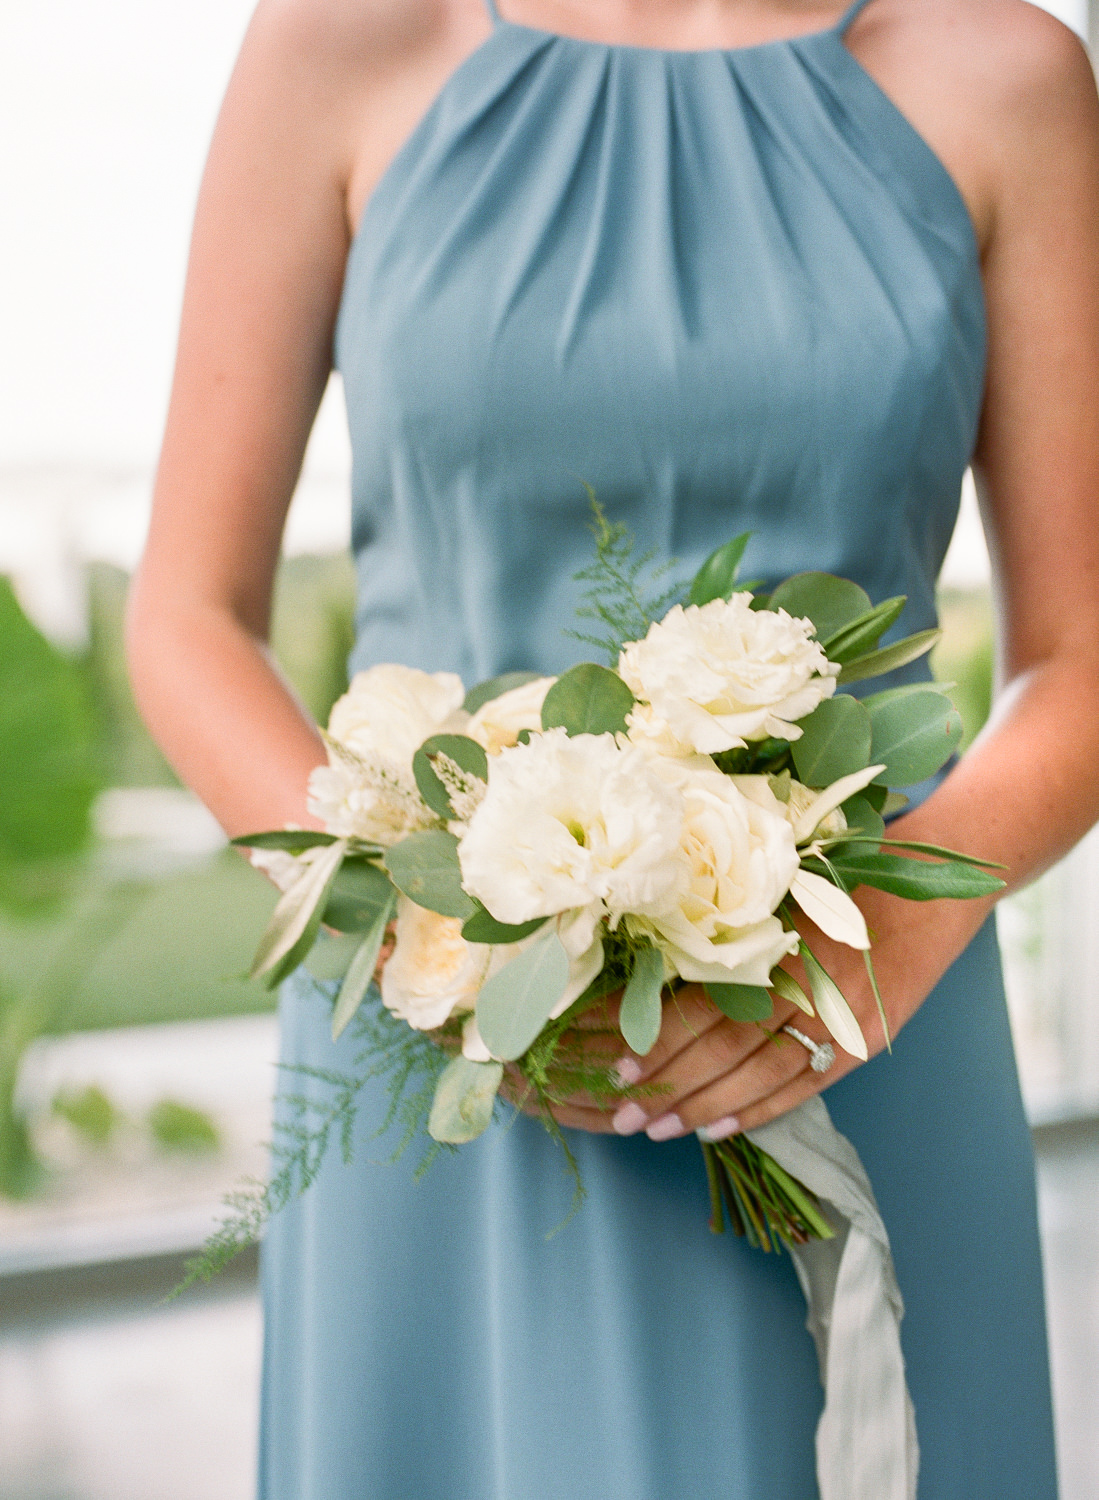 Norman's Bridal, He Loves Me Flowers, Erica Robnett Photography